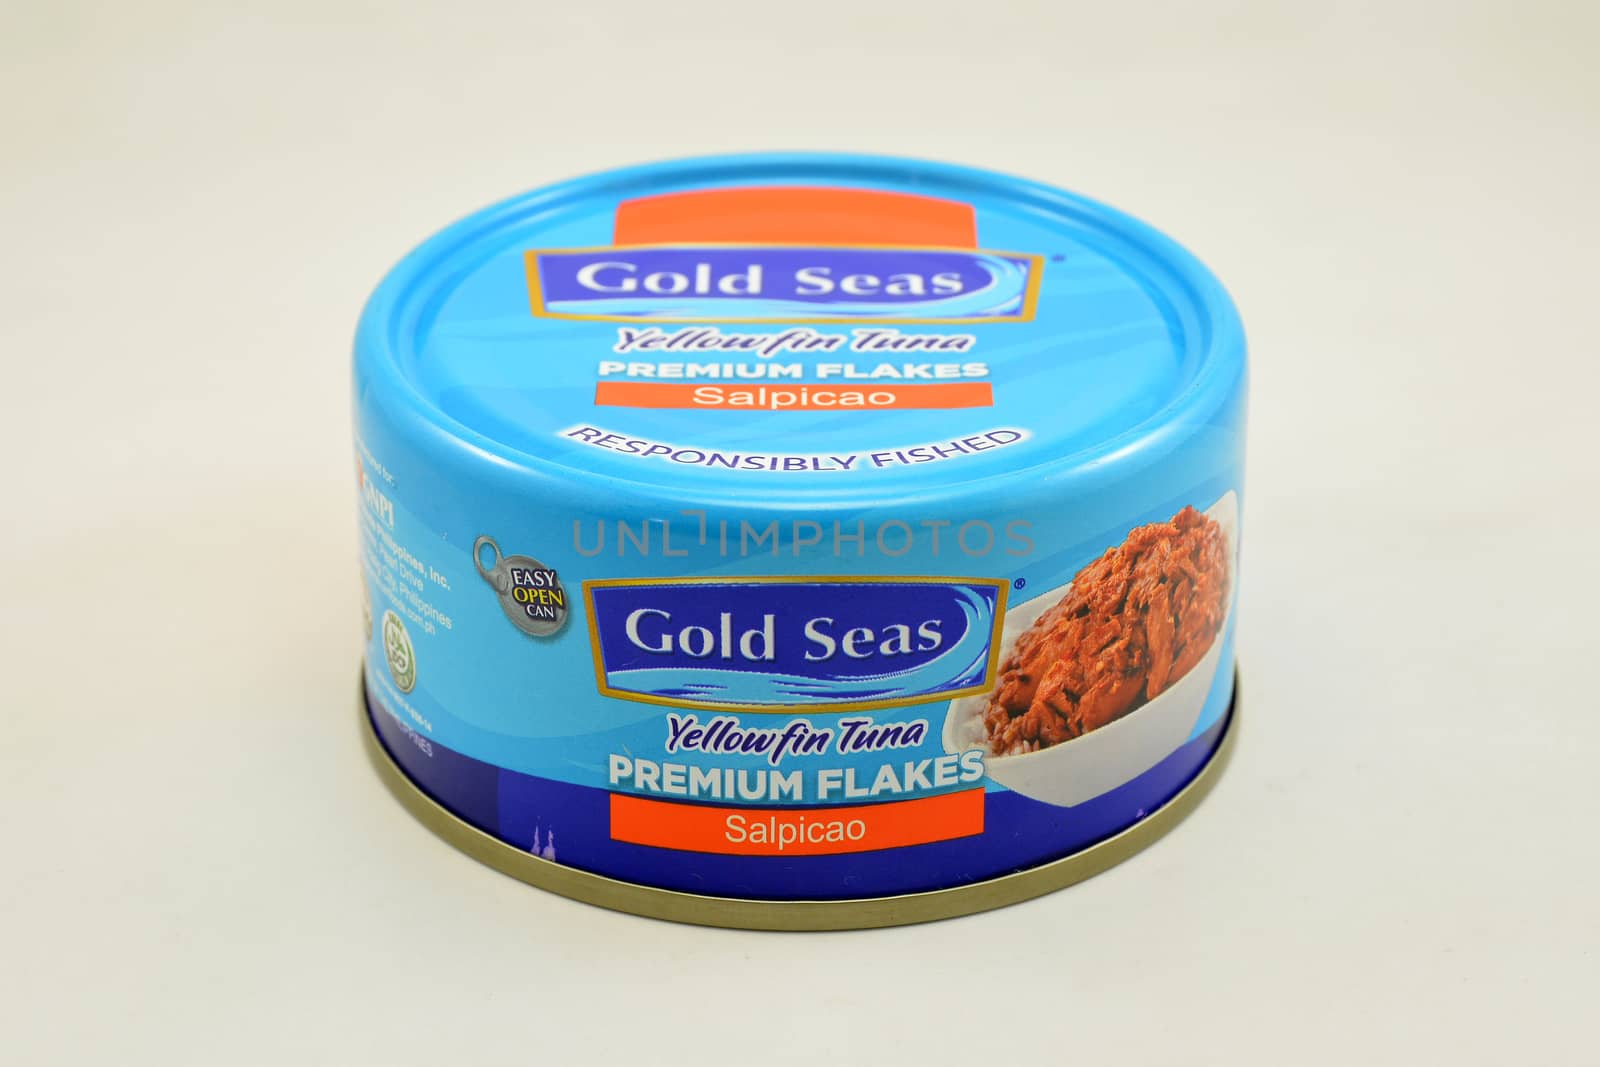 MANILA, PH - SEPT 10 - Gold seas yellowfin tuna premium flakes salpicao can on September 10, 2020 in Manila, Philippines.